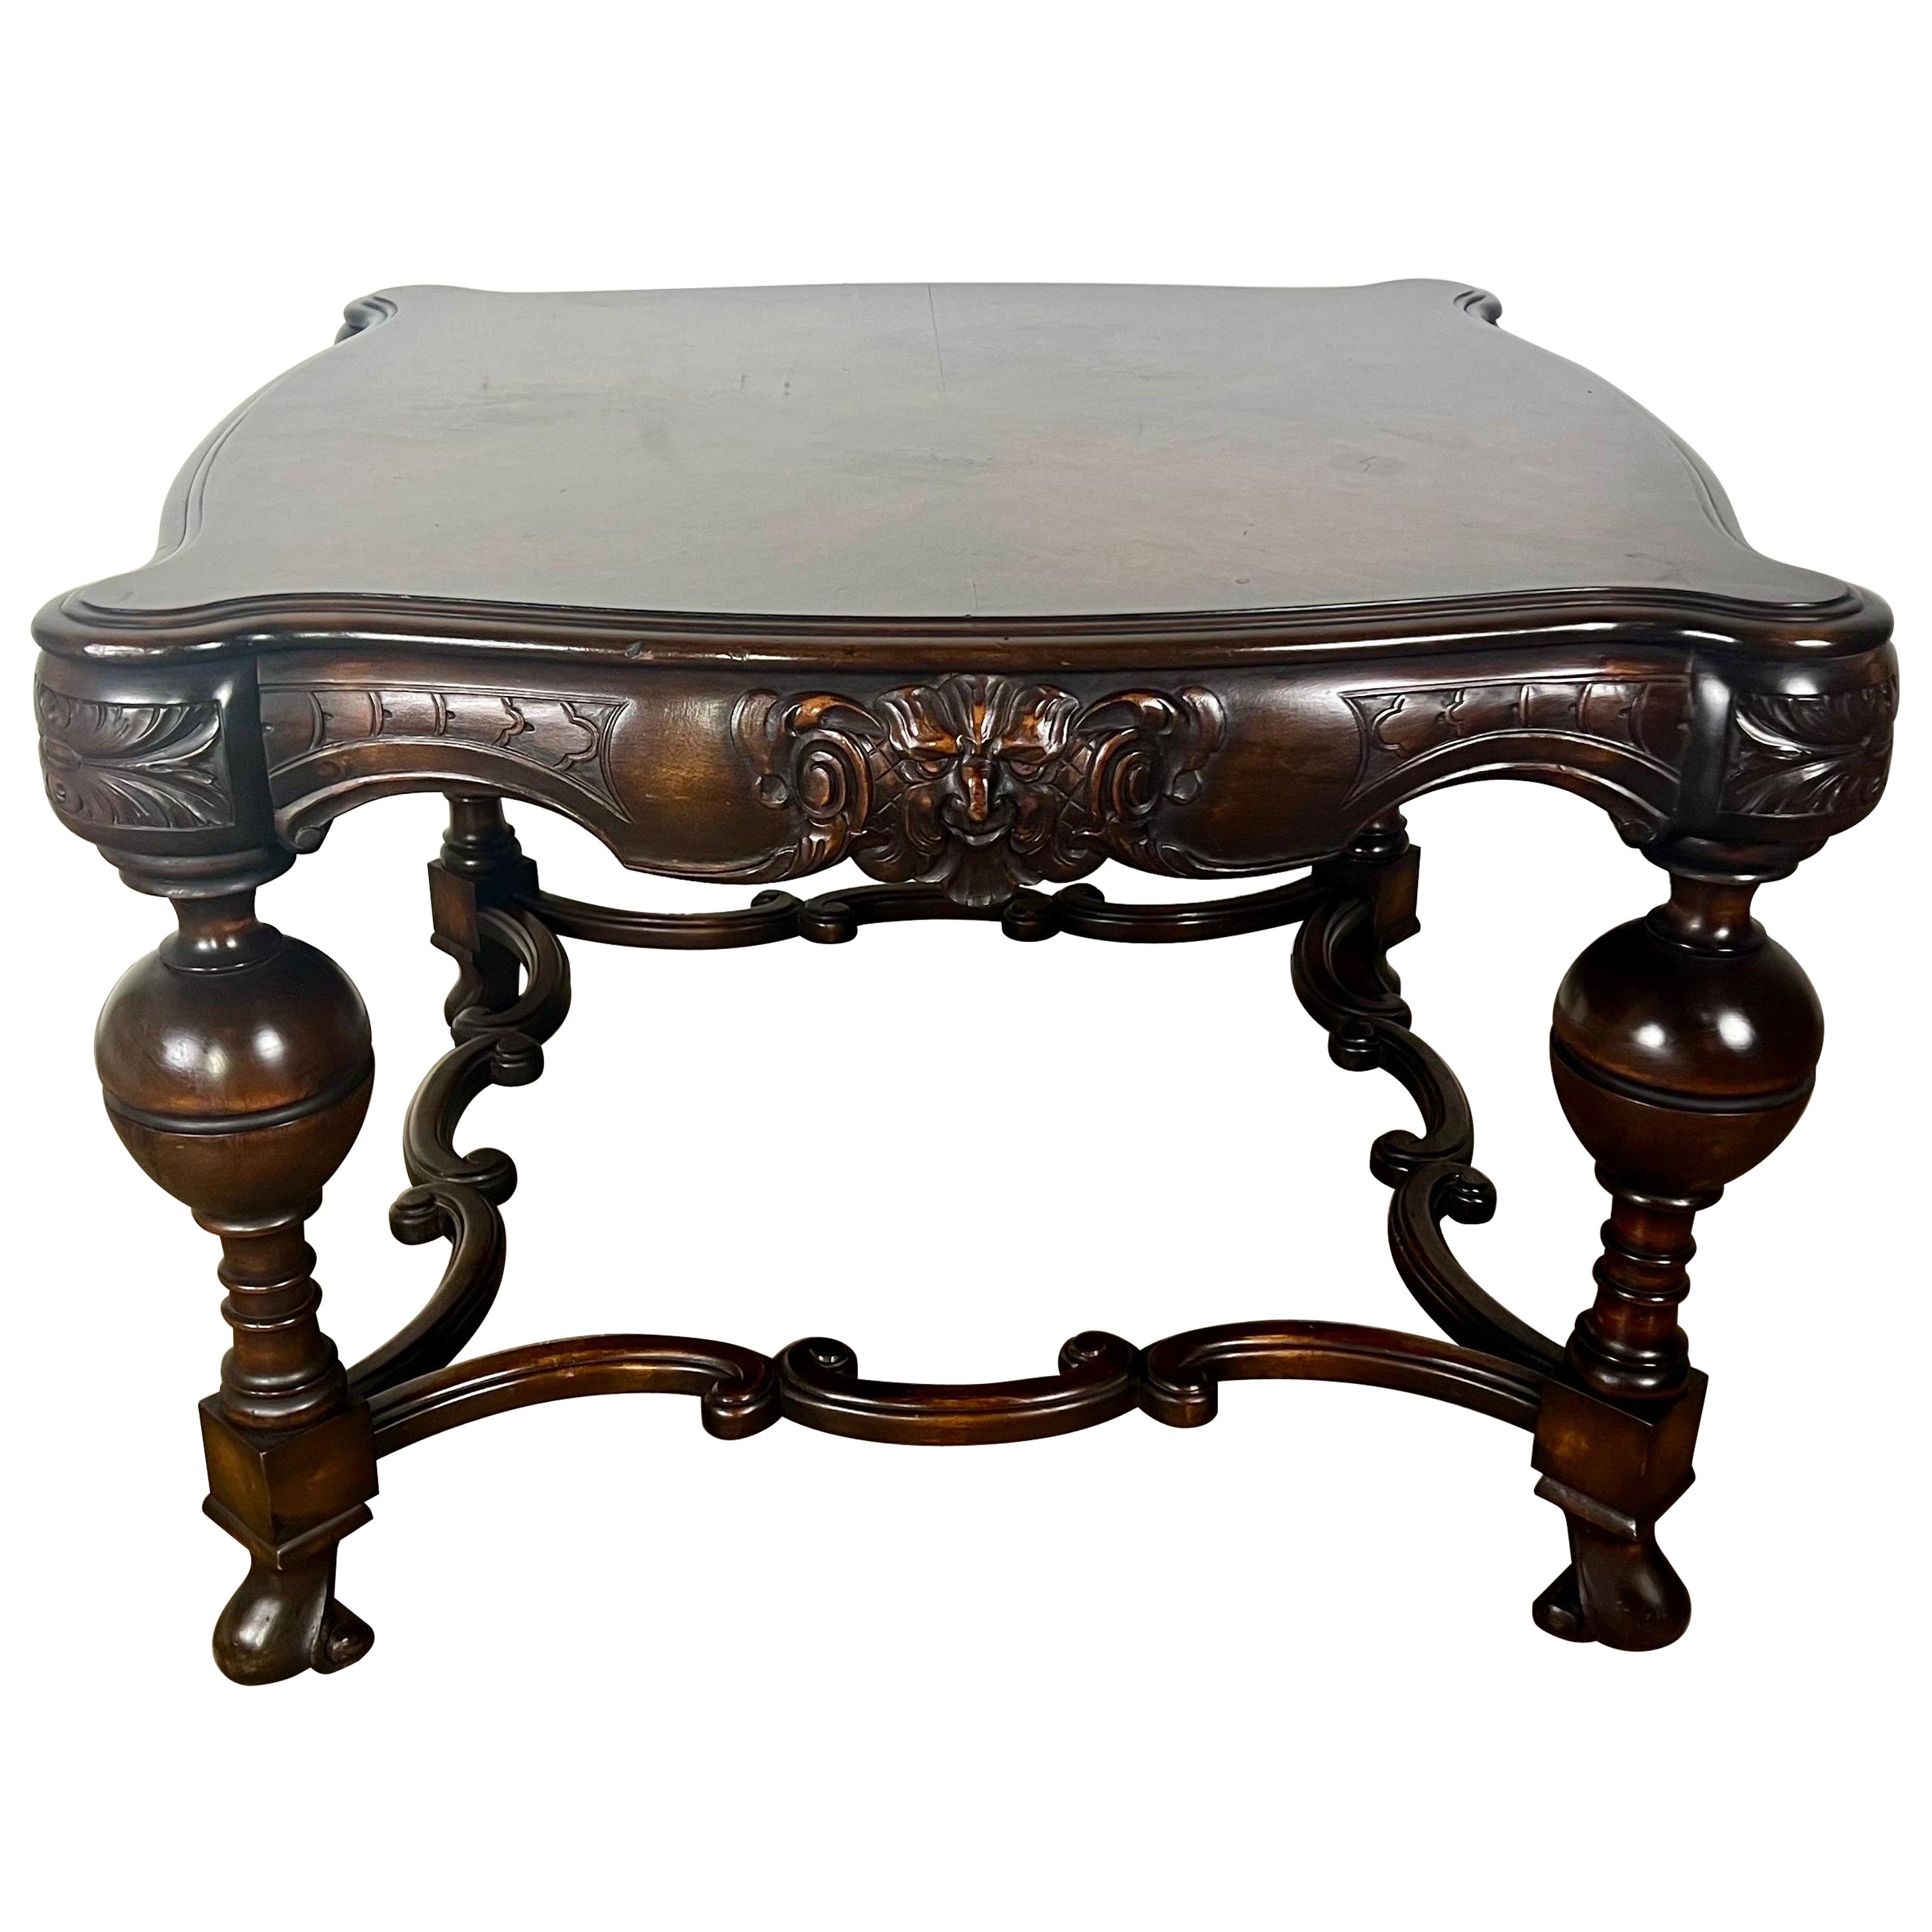 19th-century English Burl Walnut Coffee Table For Sale